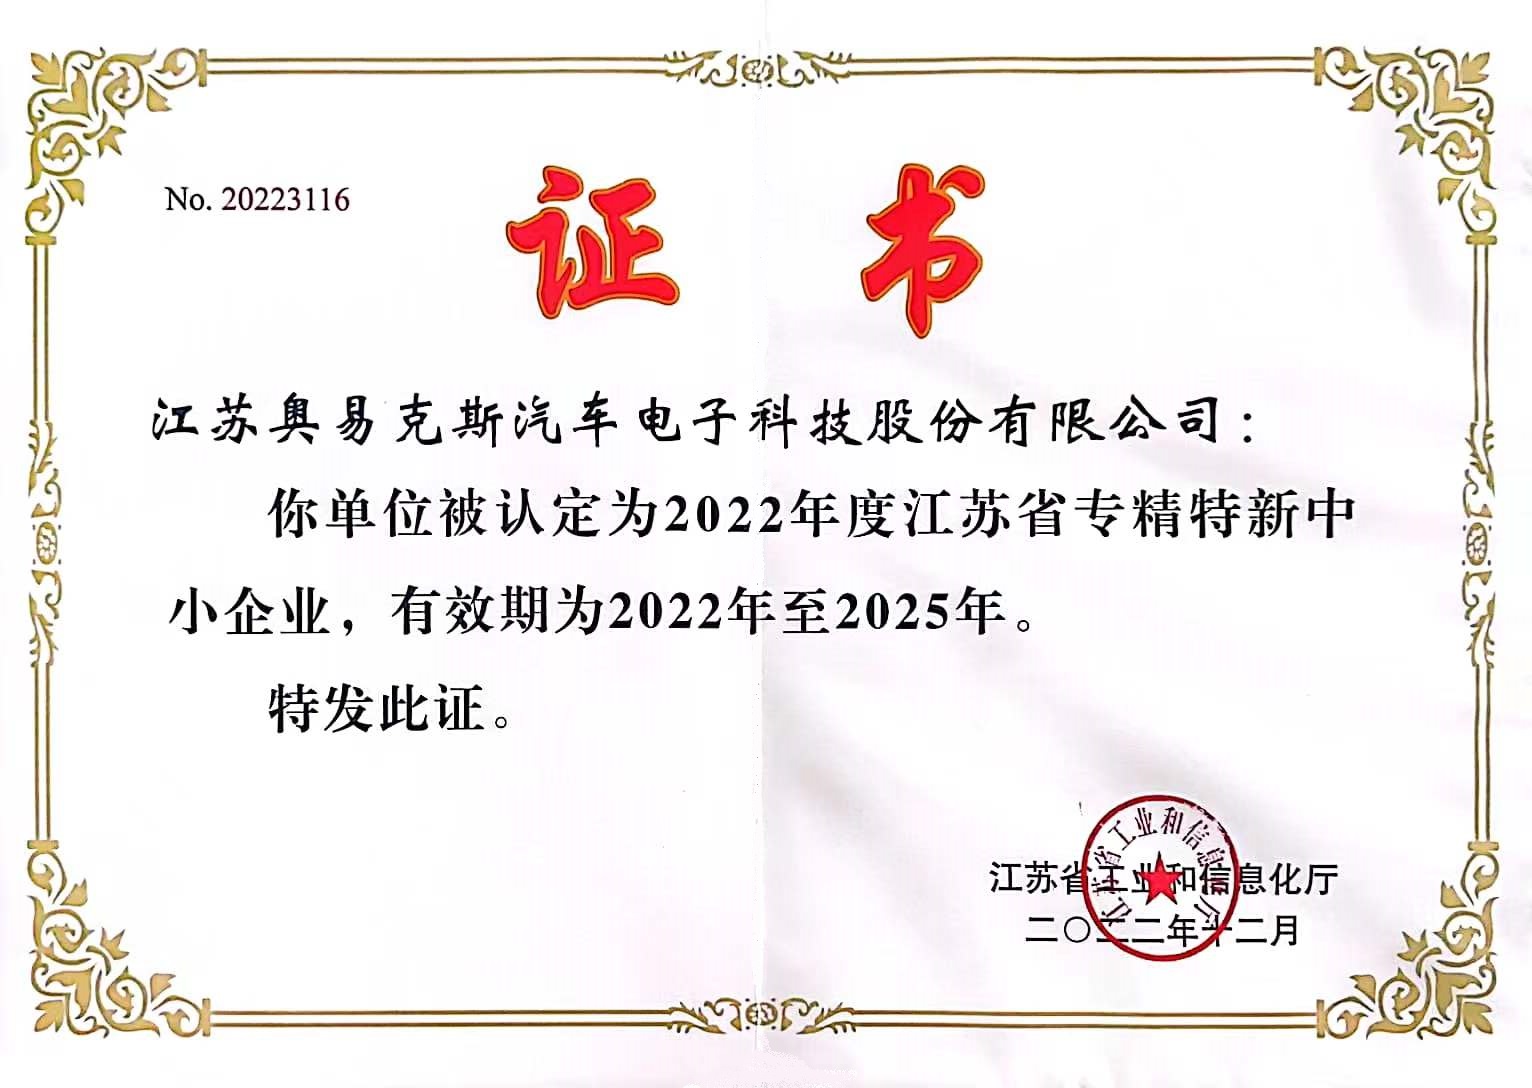 Jiangsu AECS-Jiangsu SRDI (Specialized, Refined, Differential and Innovative) Enterprise of 2022